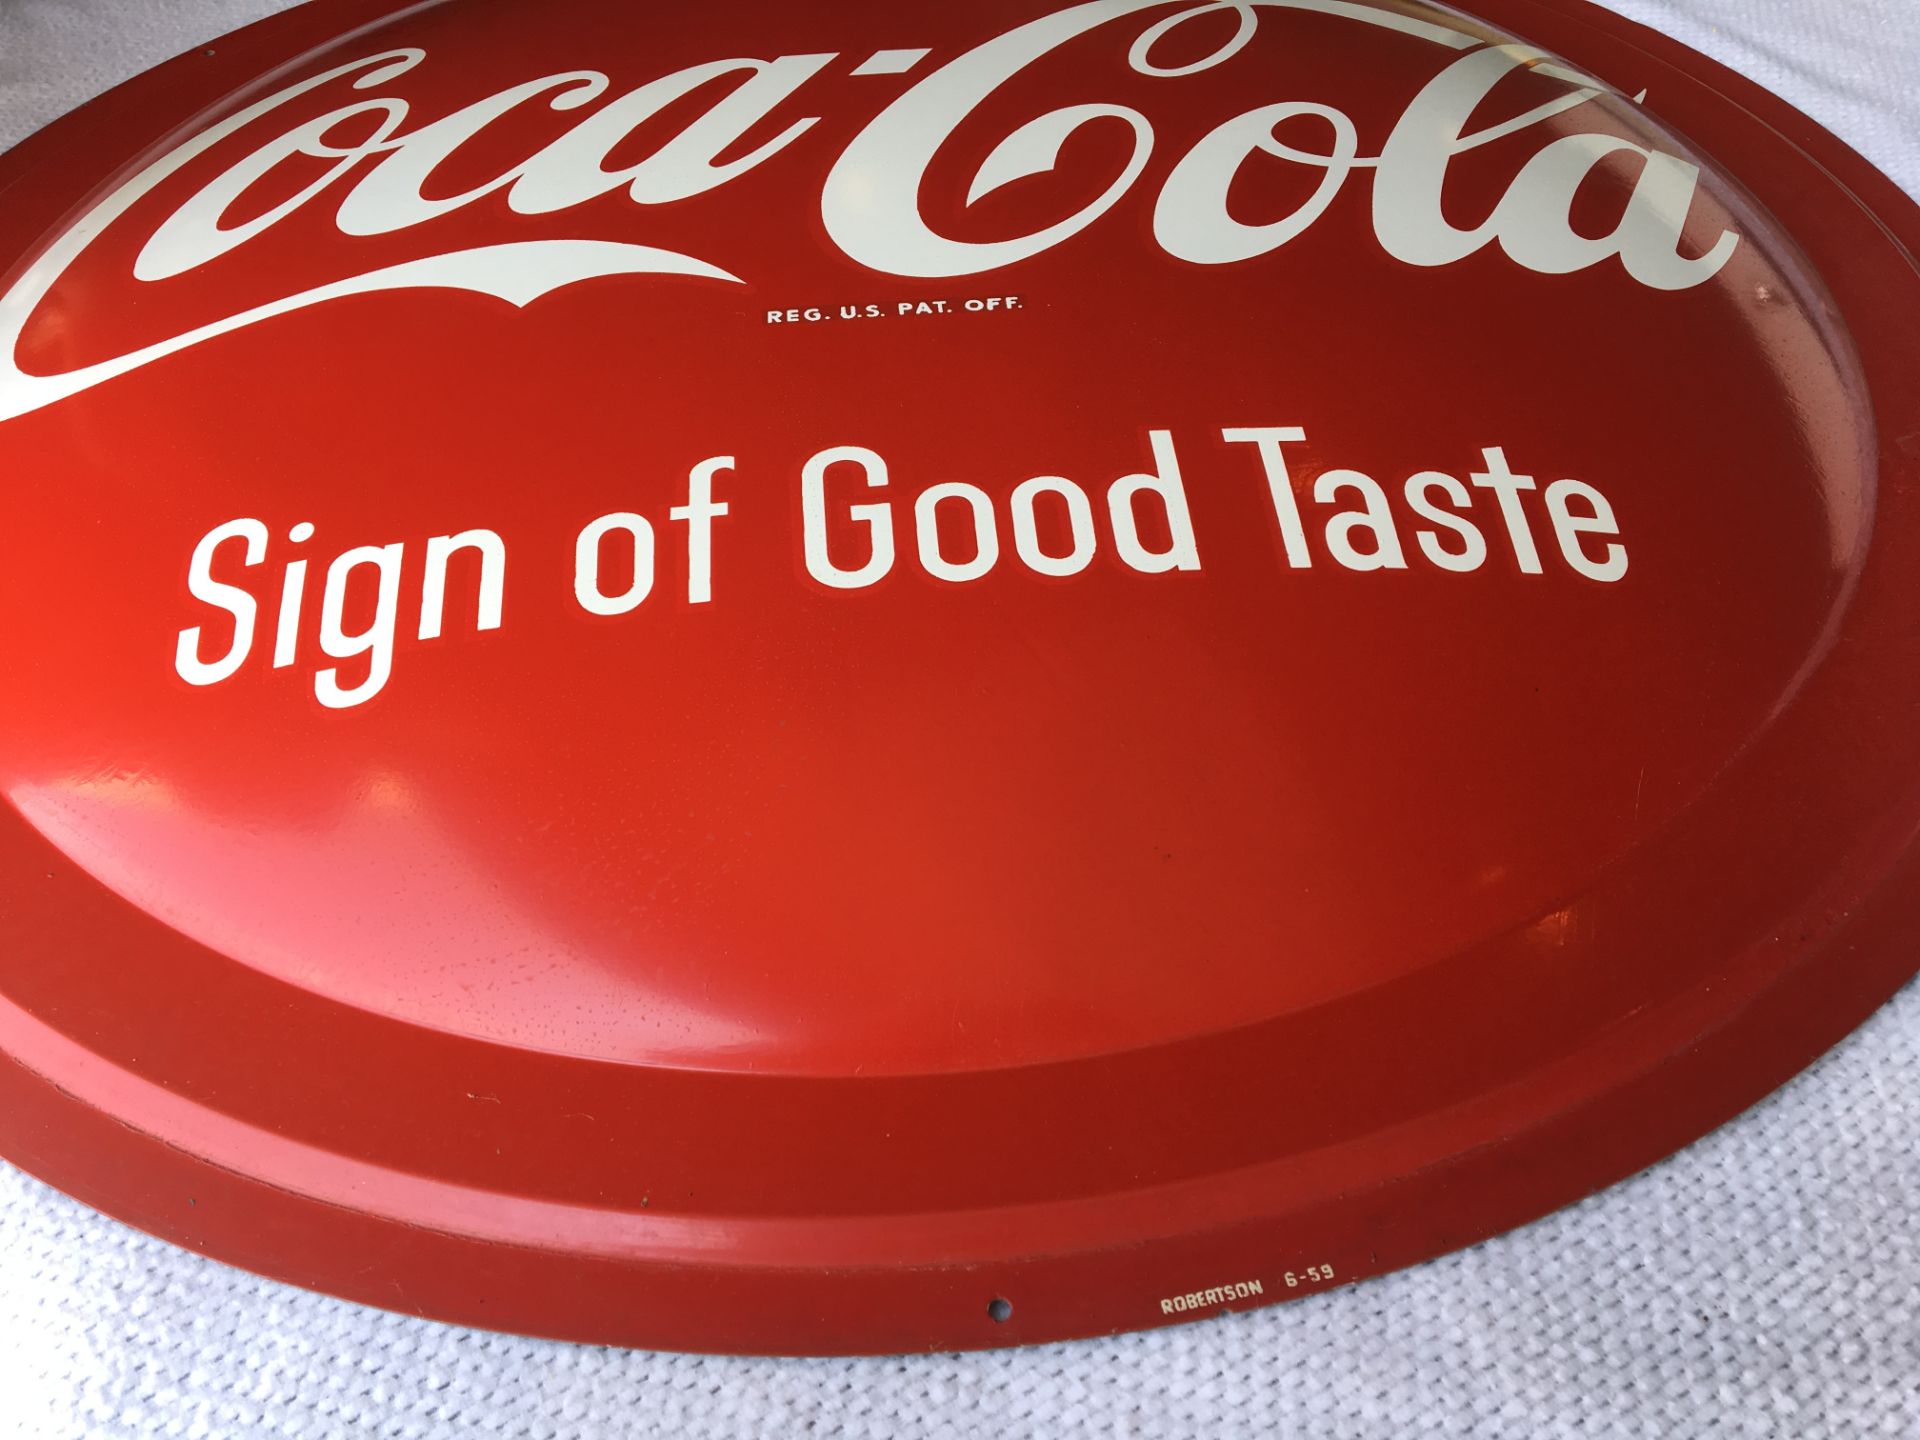 Coca Cola 36” Round Sign – Robertson (6-59) - Image 2 of 2